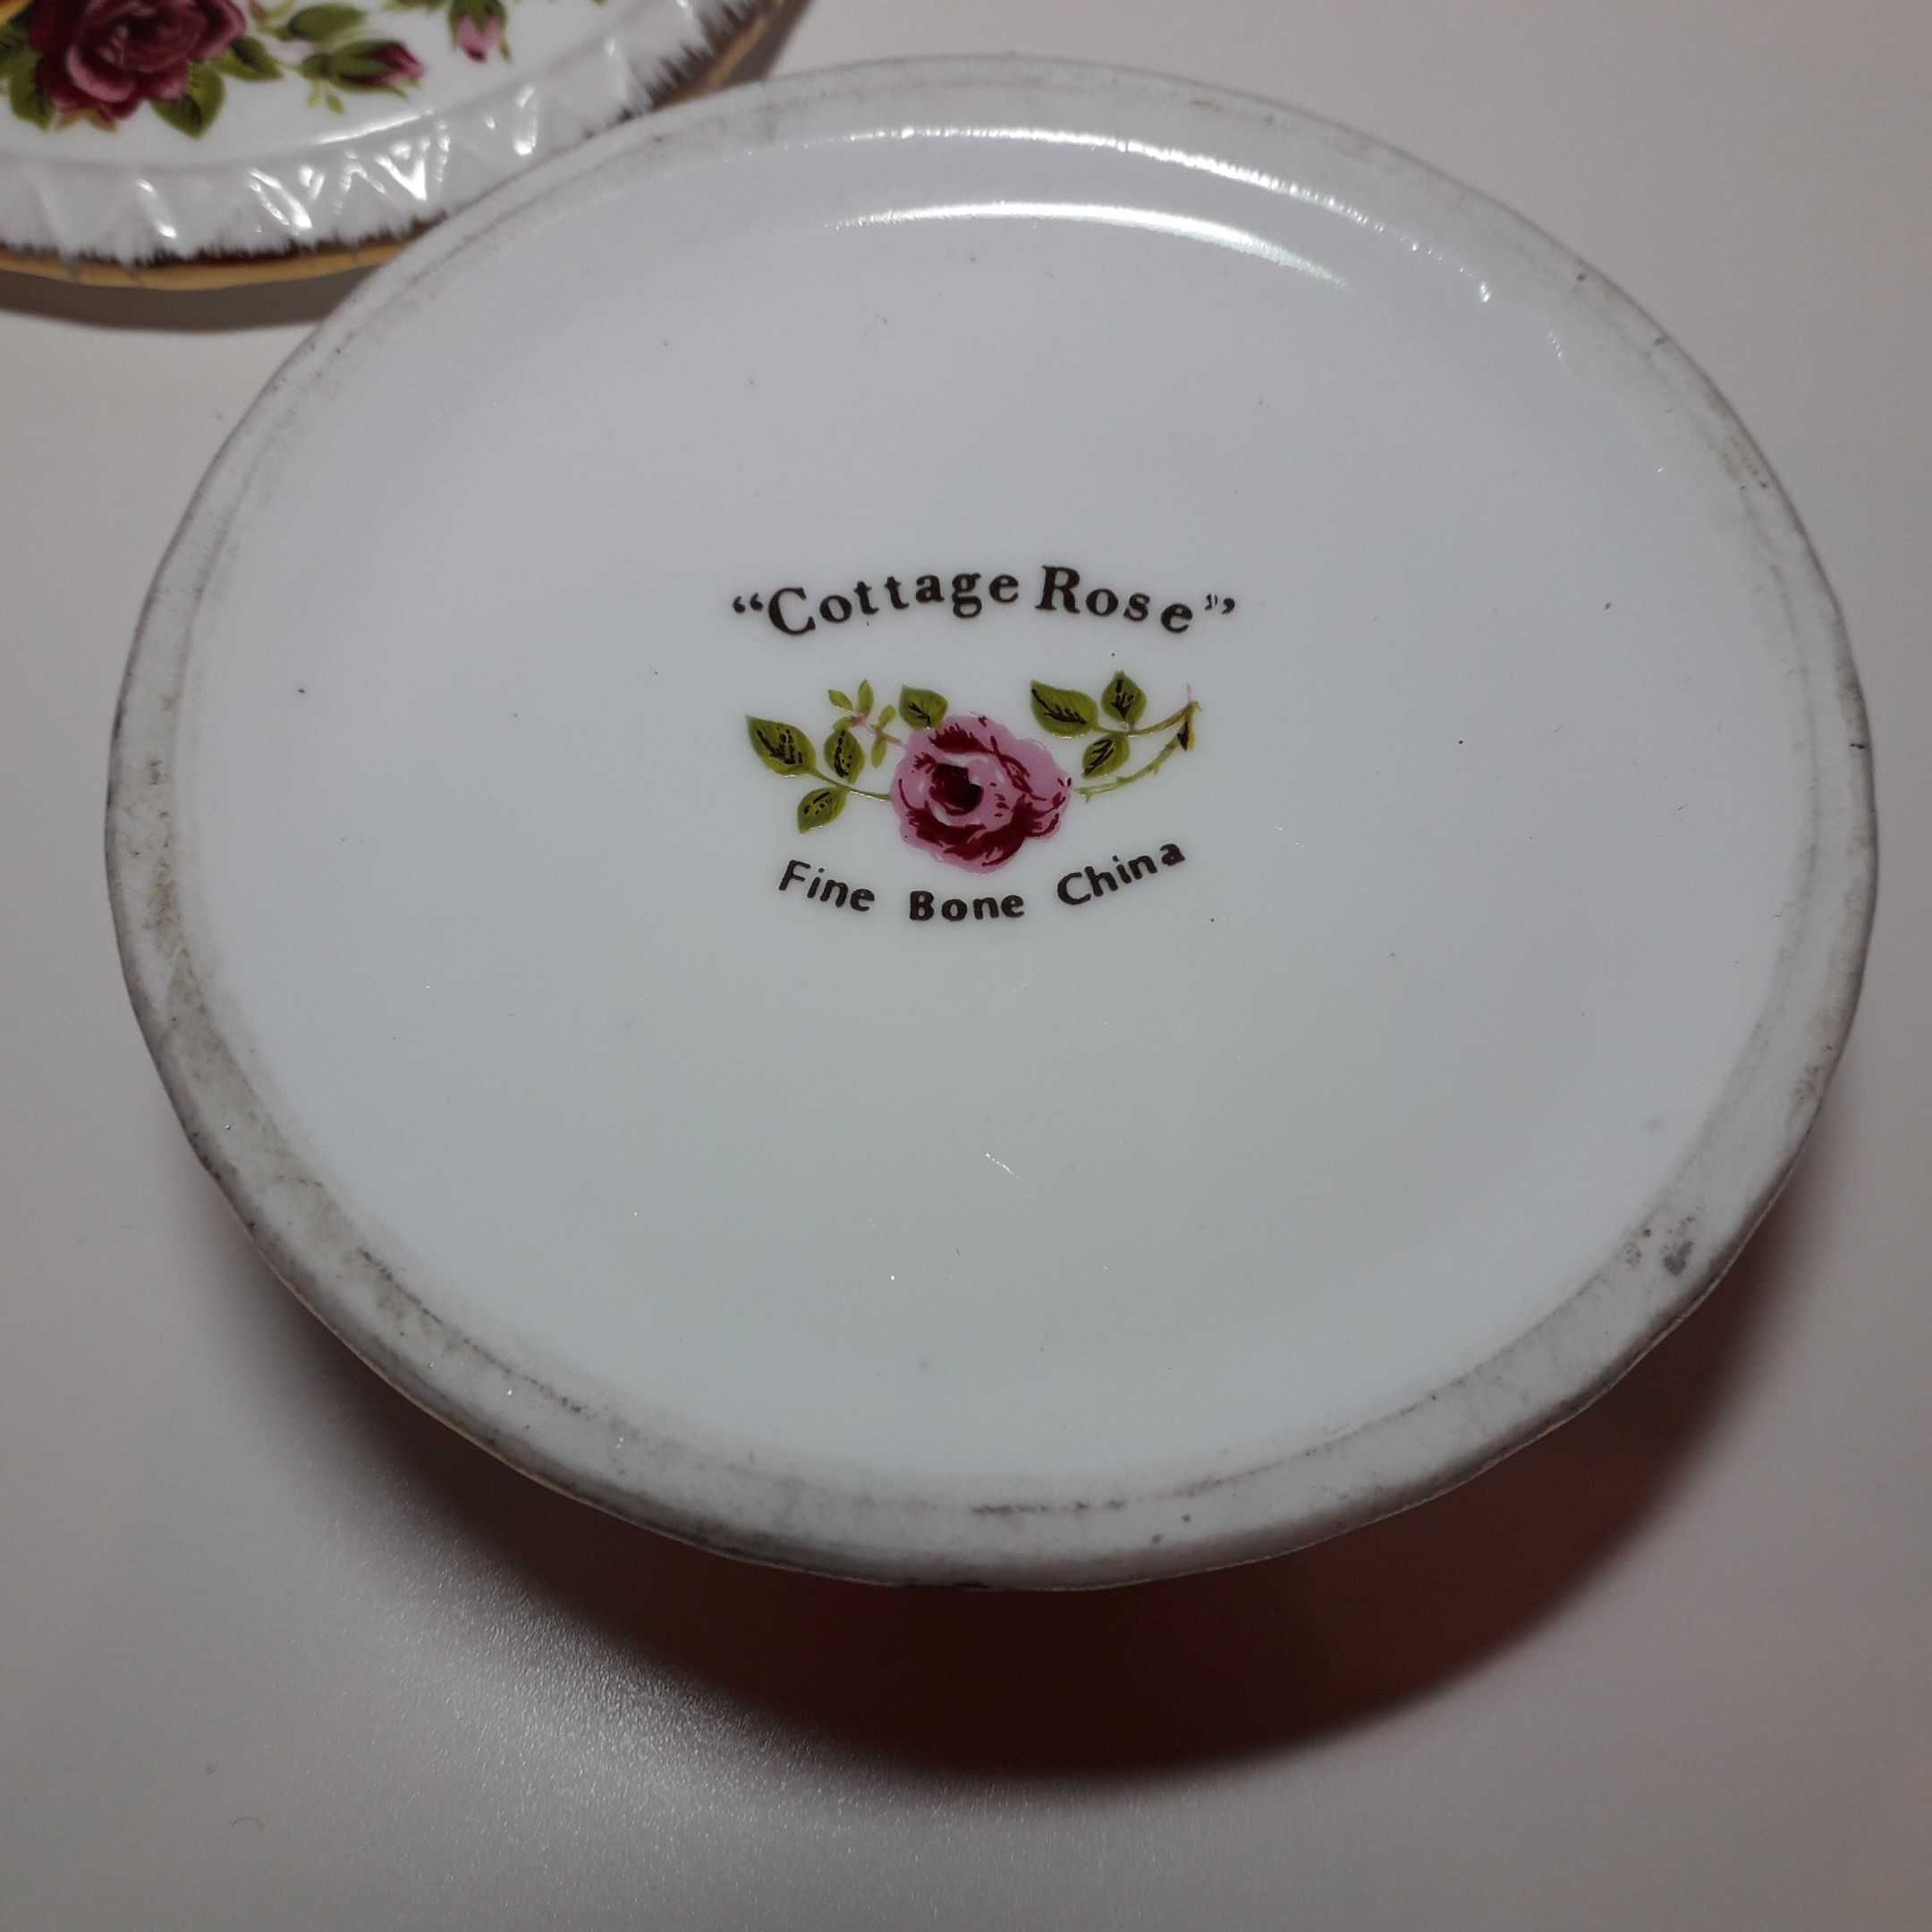 Puzderko porcelana – Cottage Rose Fine Bone China